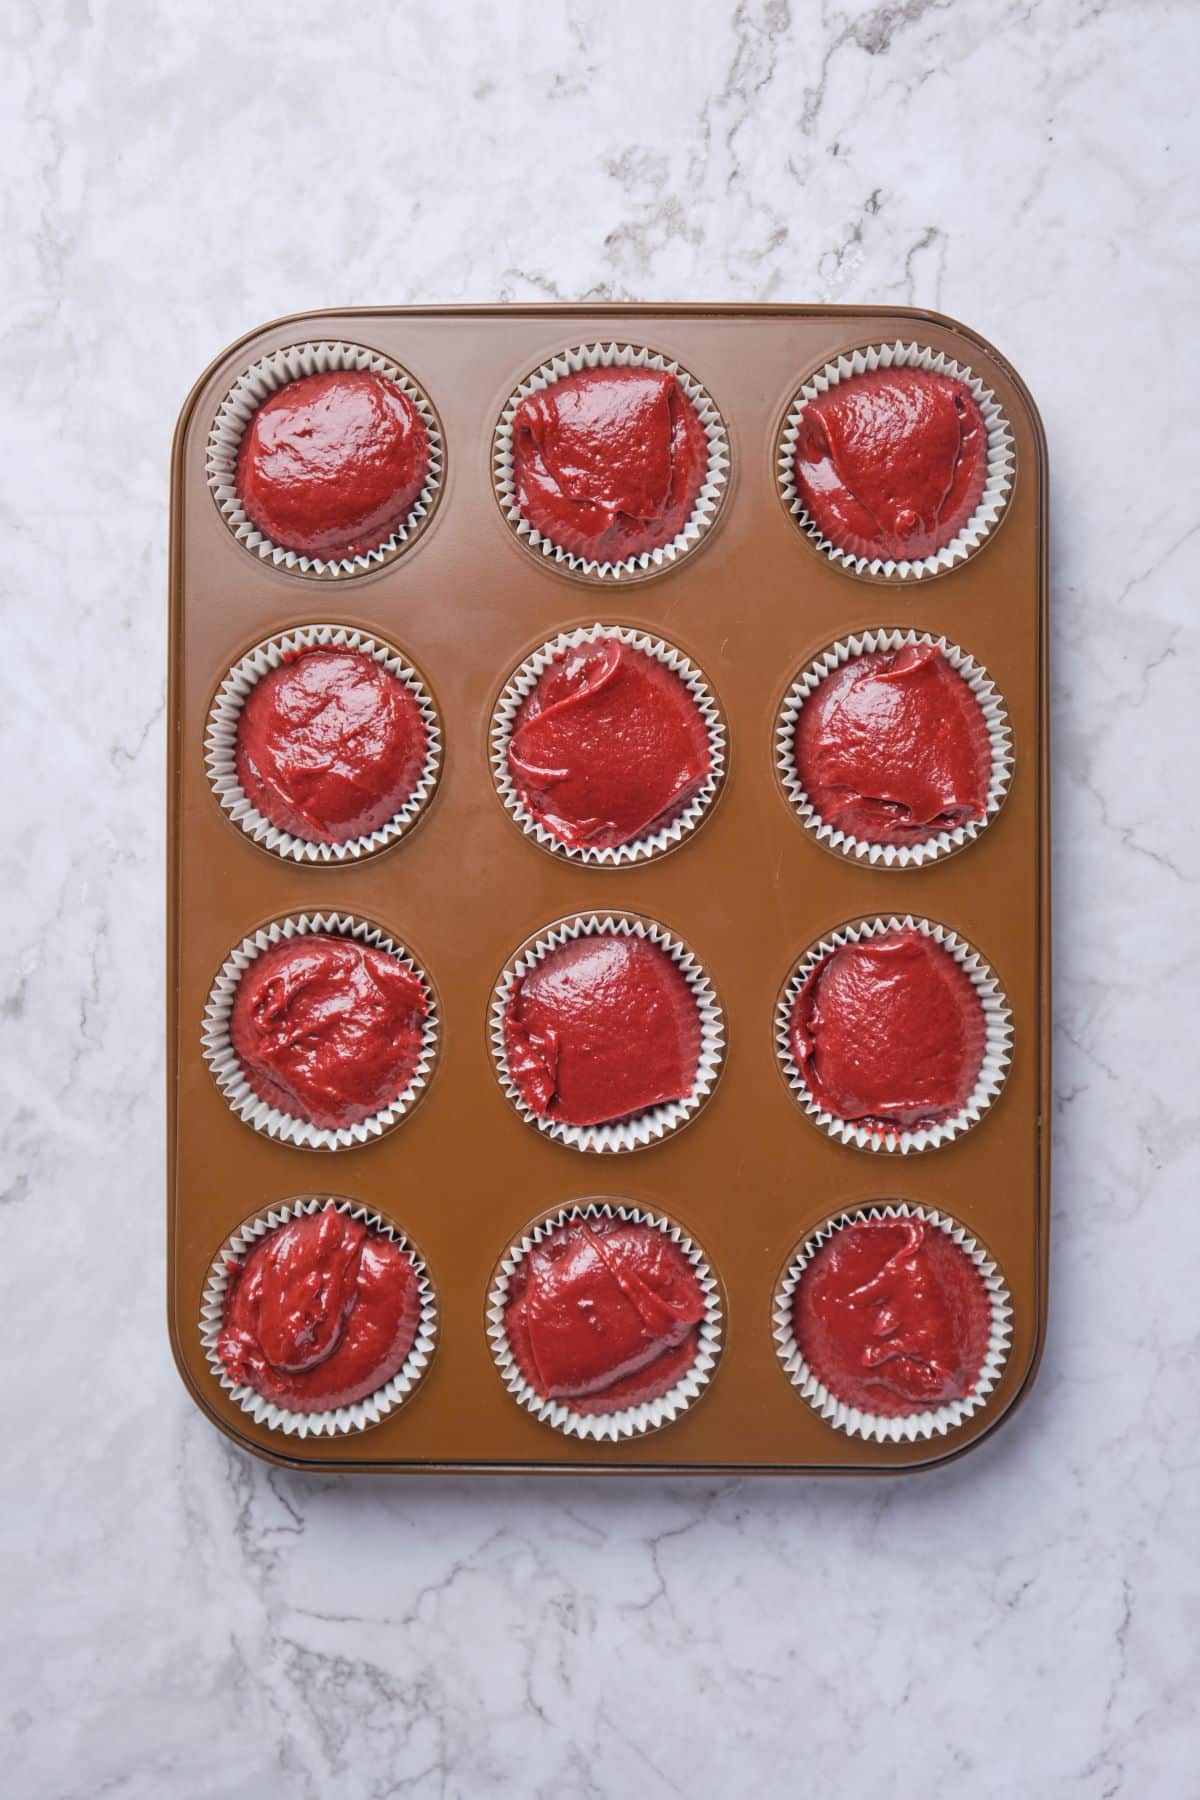 Red velvet cupcakes batter in a cupcake tin.